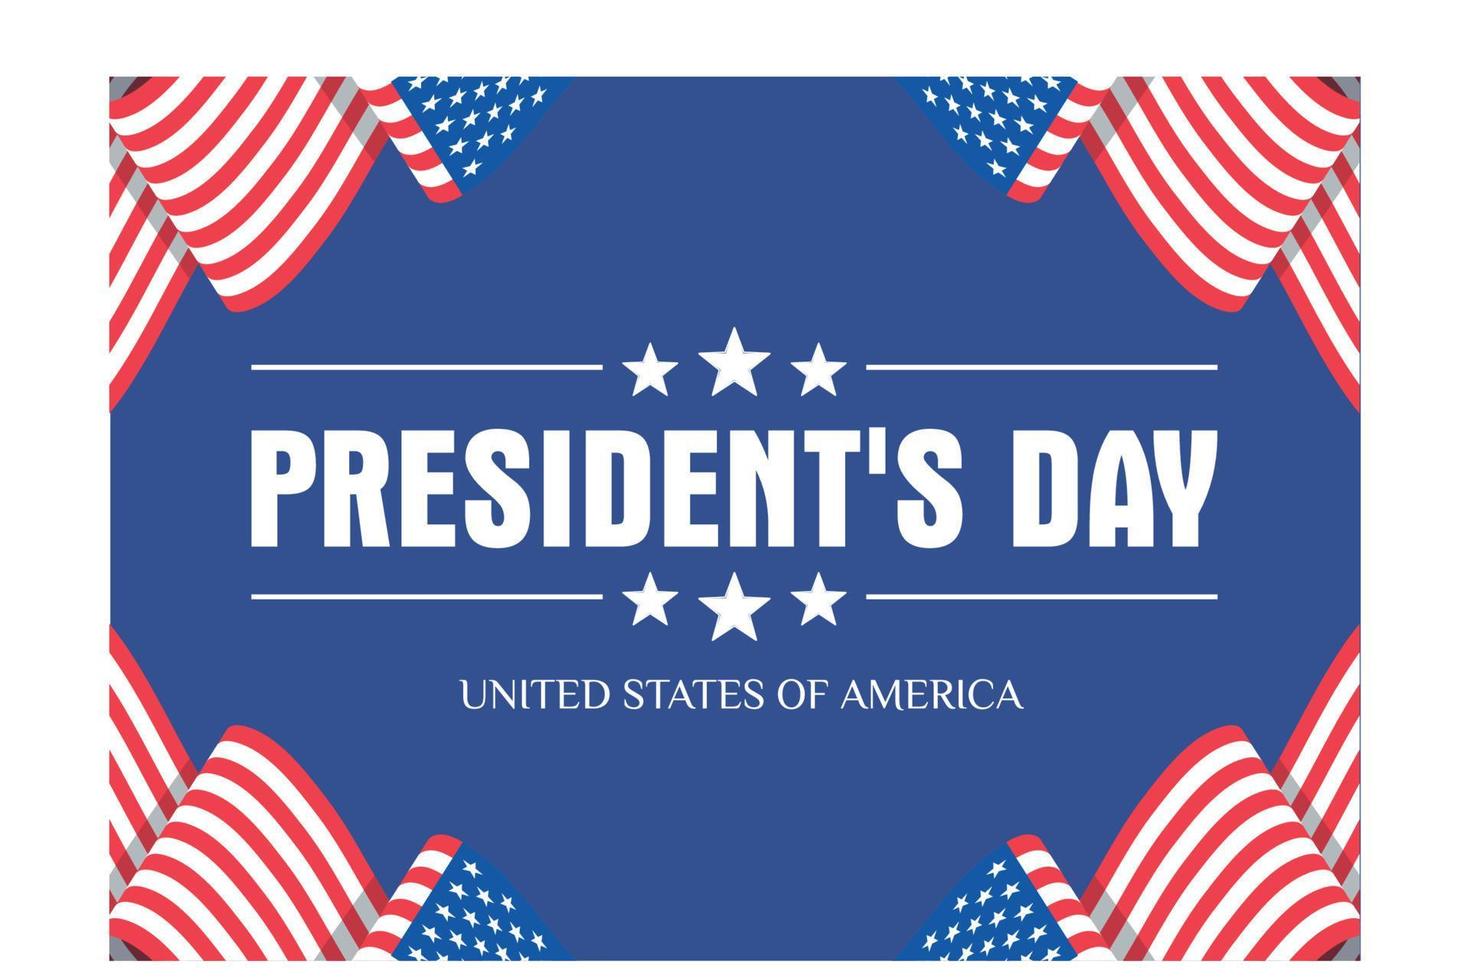 Presidents Day Background Design, Banner, Poster, Greeting Card, flat vector modern illustration